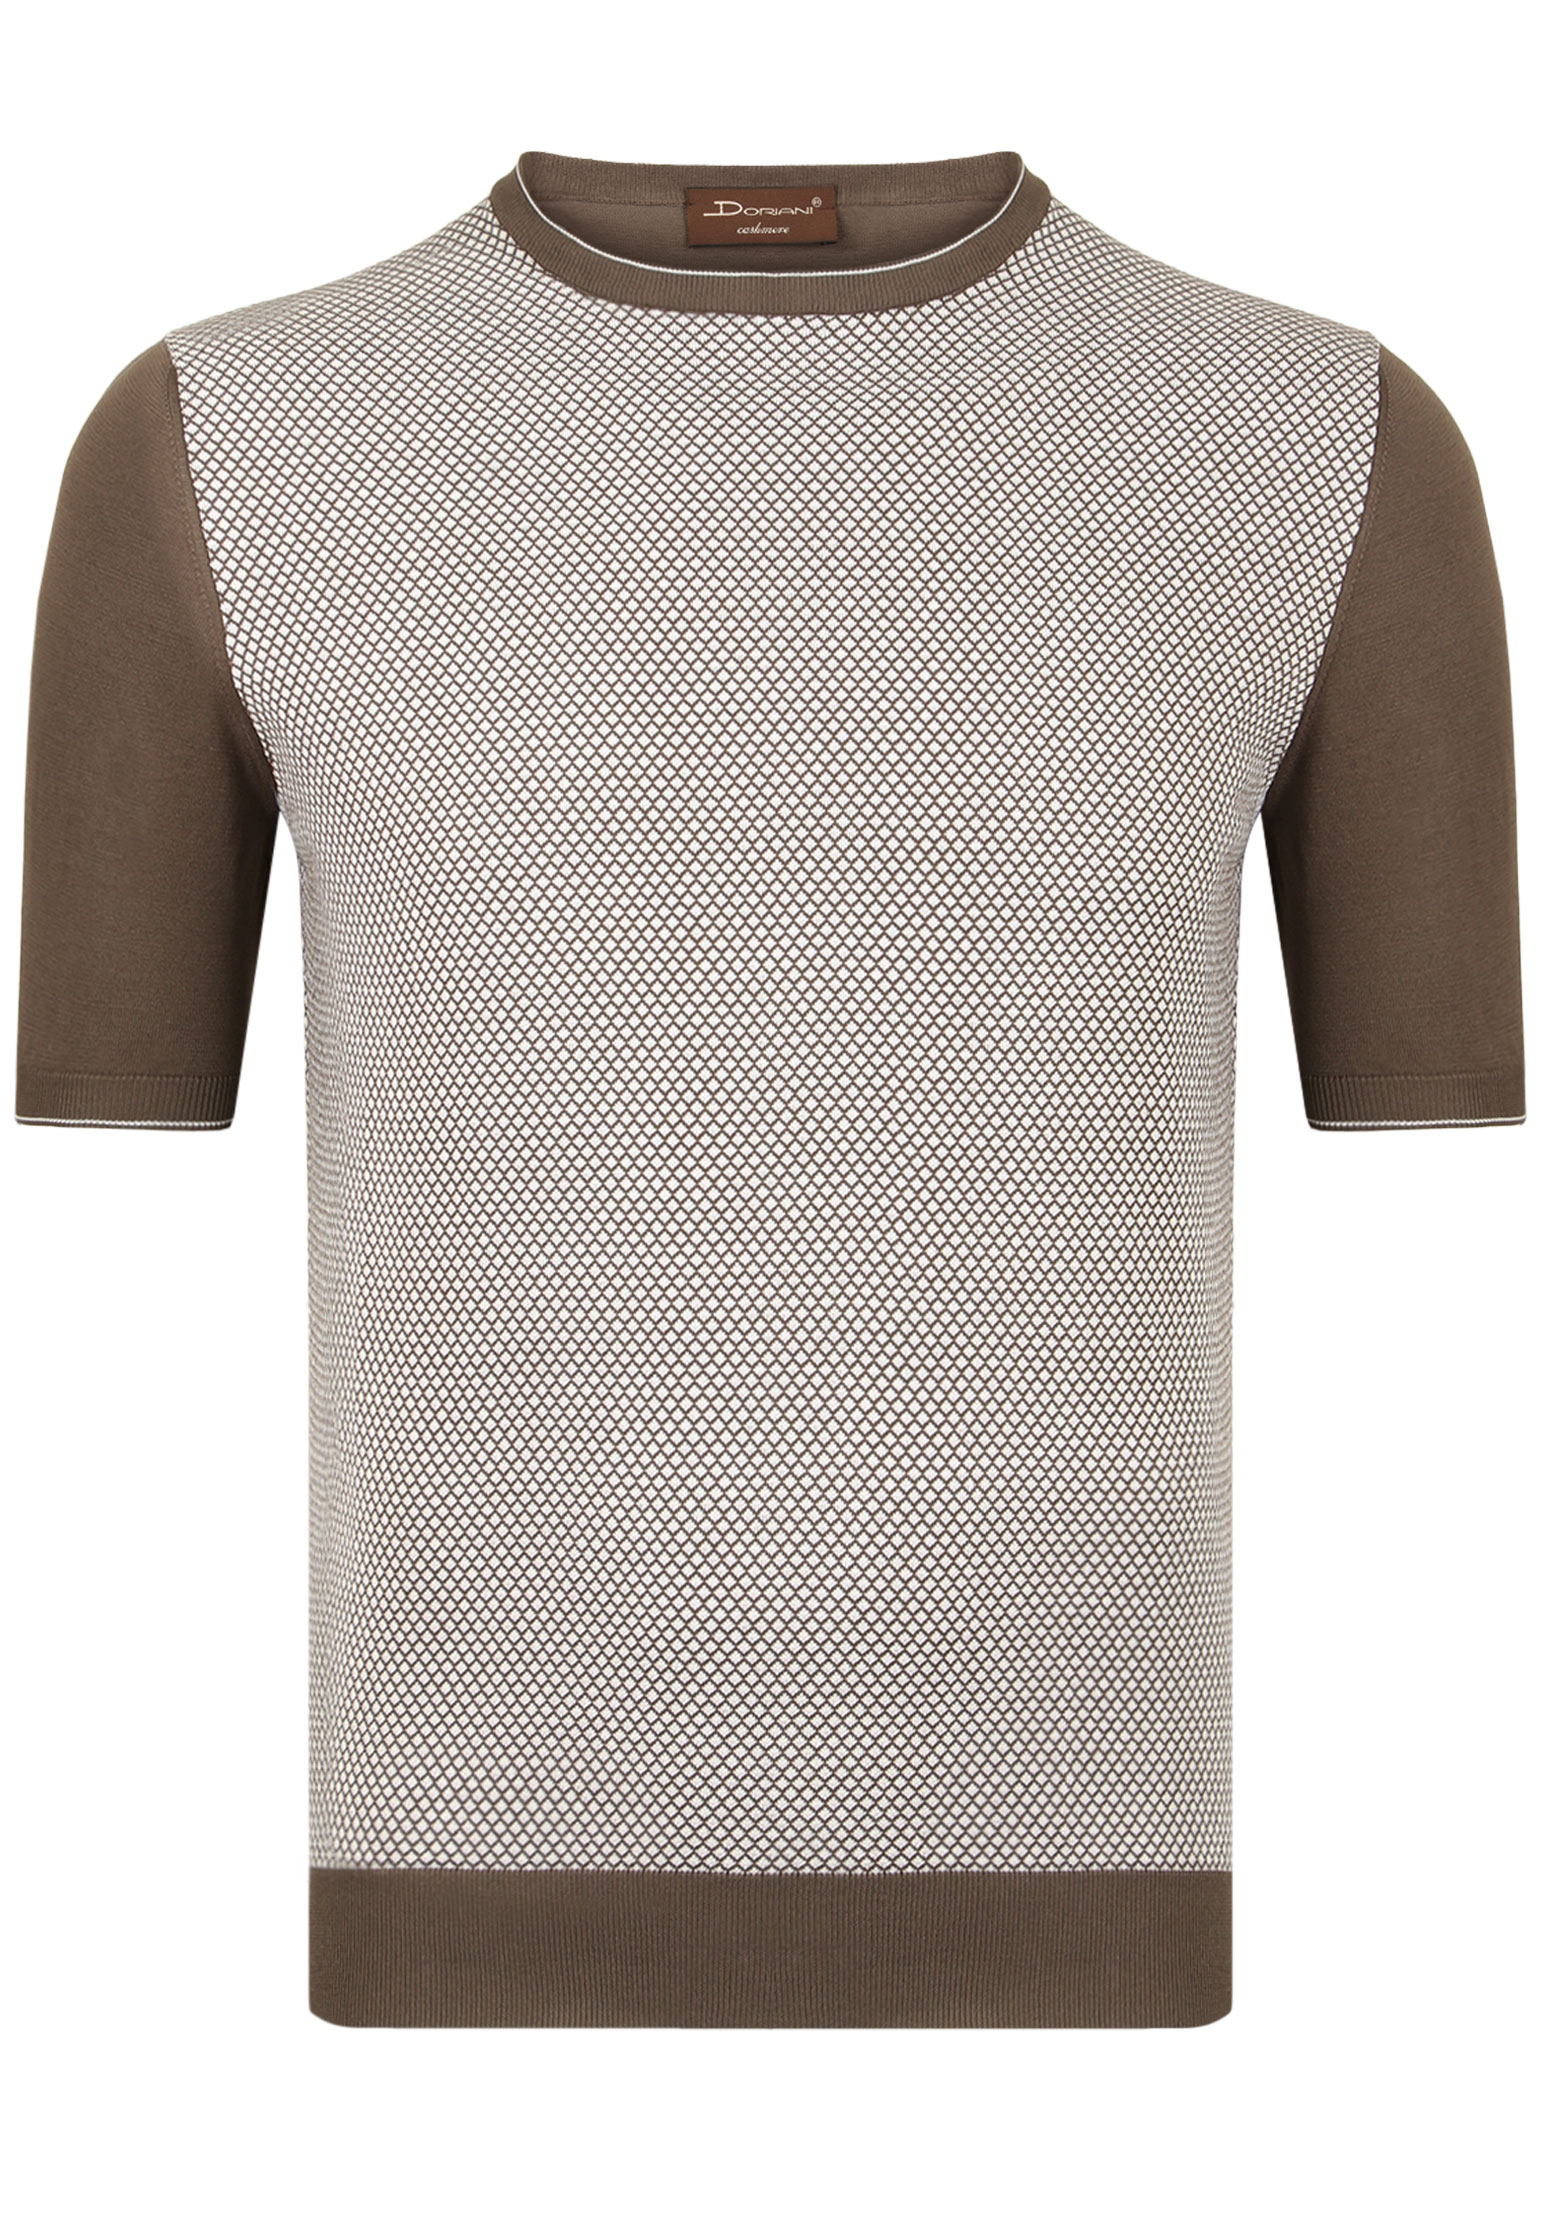 Пуловер DORIANI Коричневый, размер 50